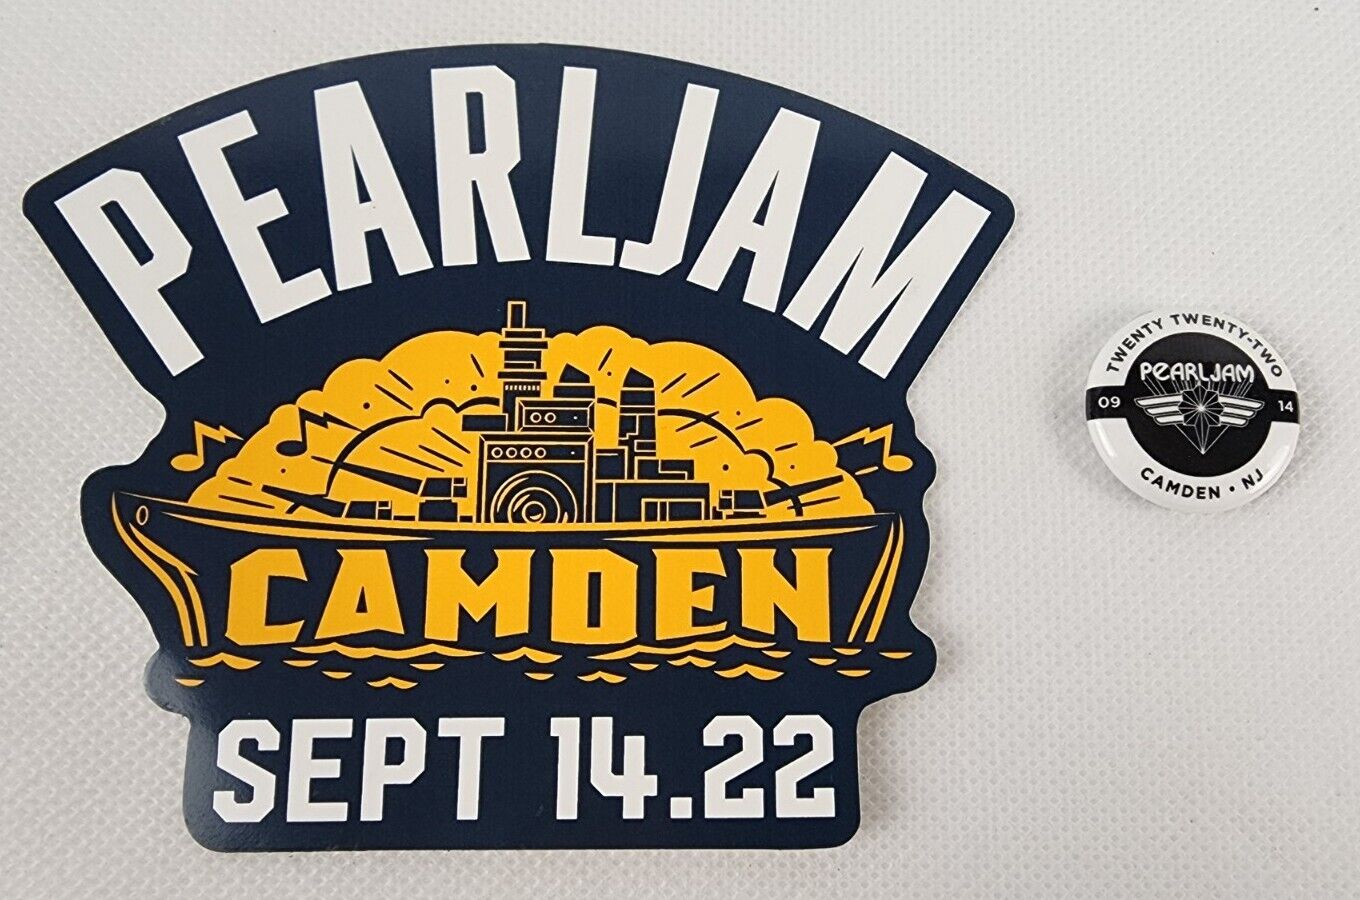 2022 Pearl Jam Gigaton Tour 9/14 Camden New Jersey Exclusive Pin & Sticker Set